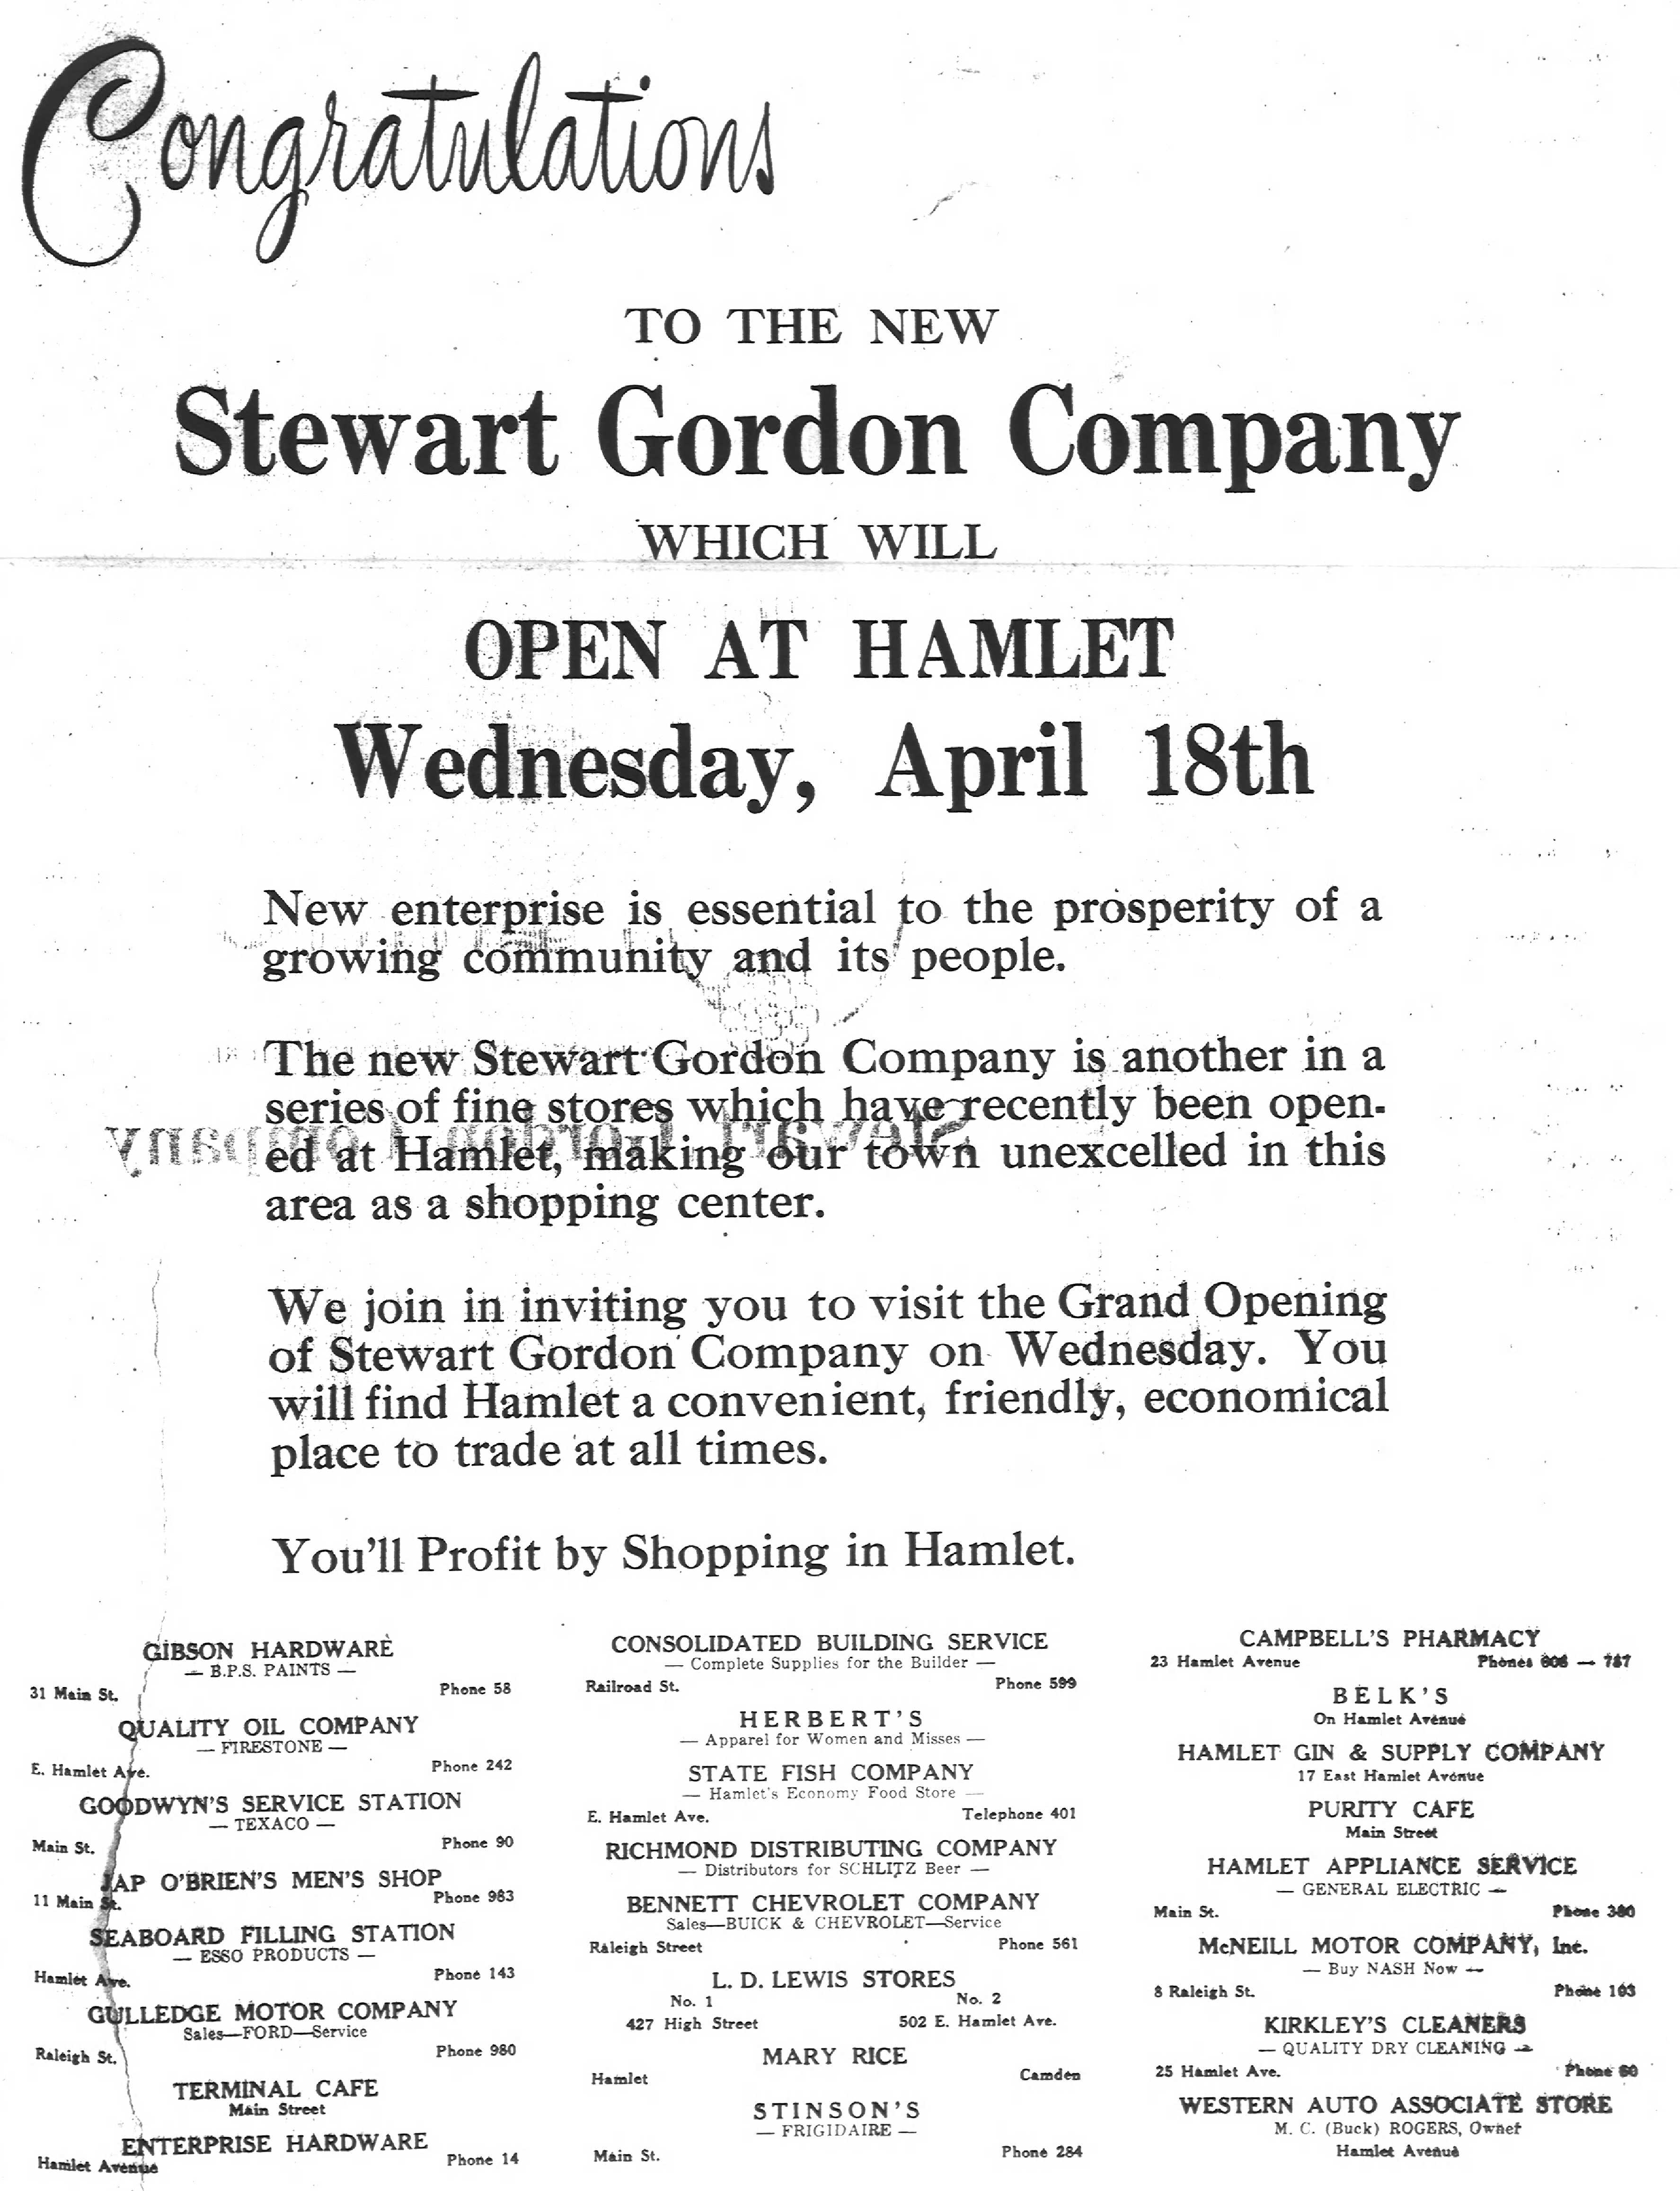 Stewart Gordan Furniture April 18, 1951.jpg